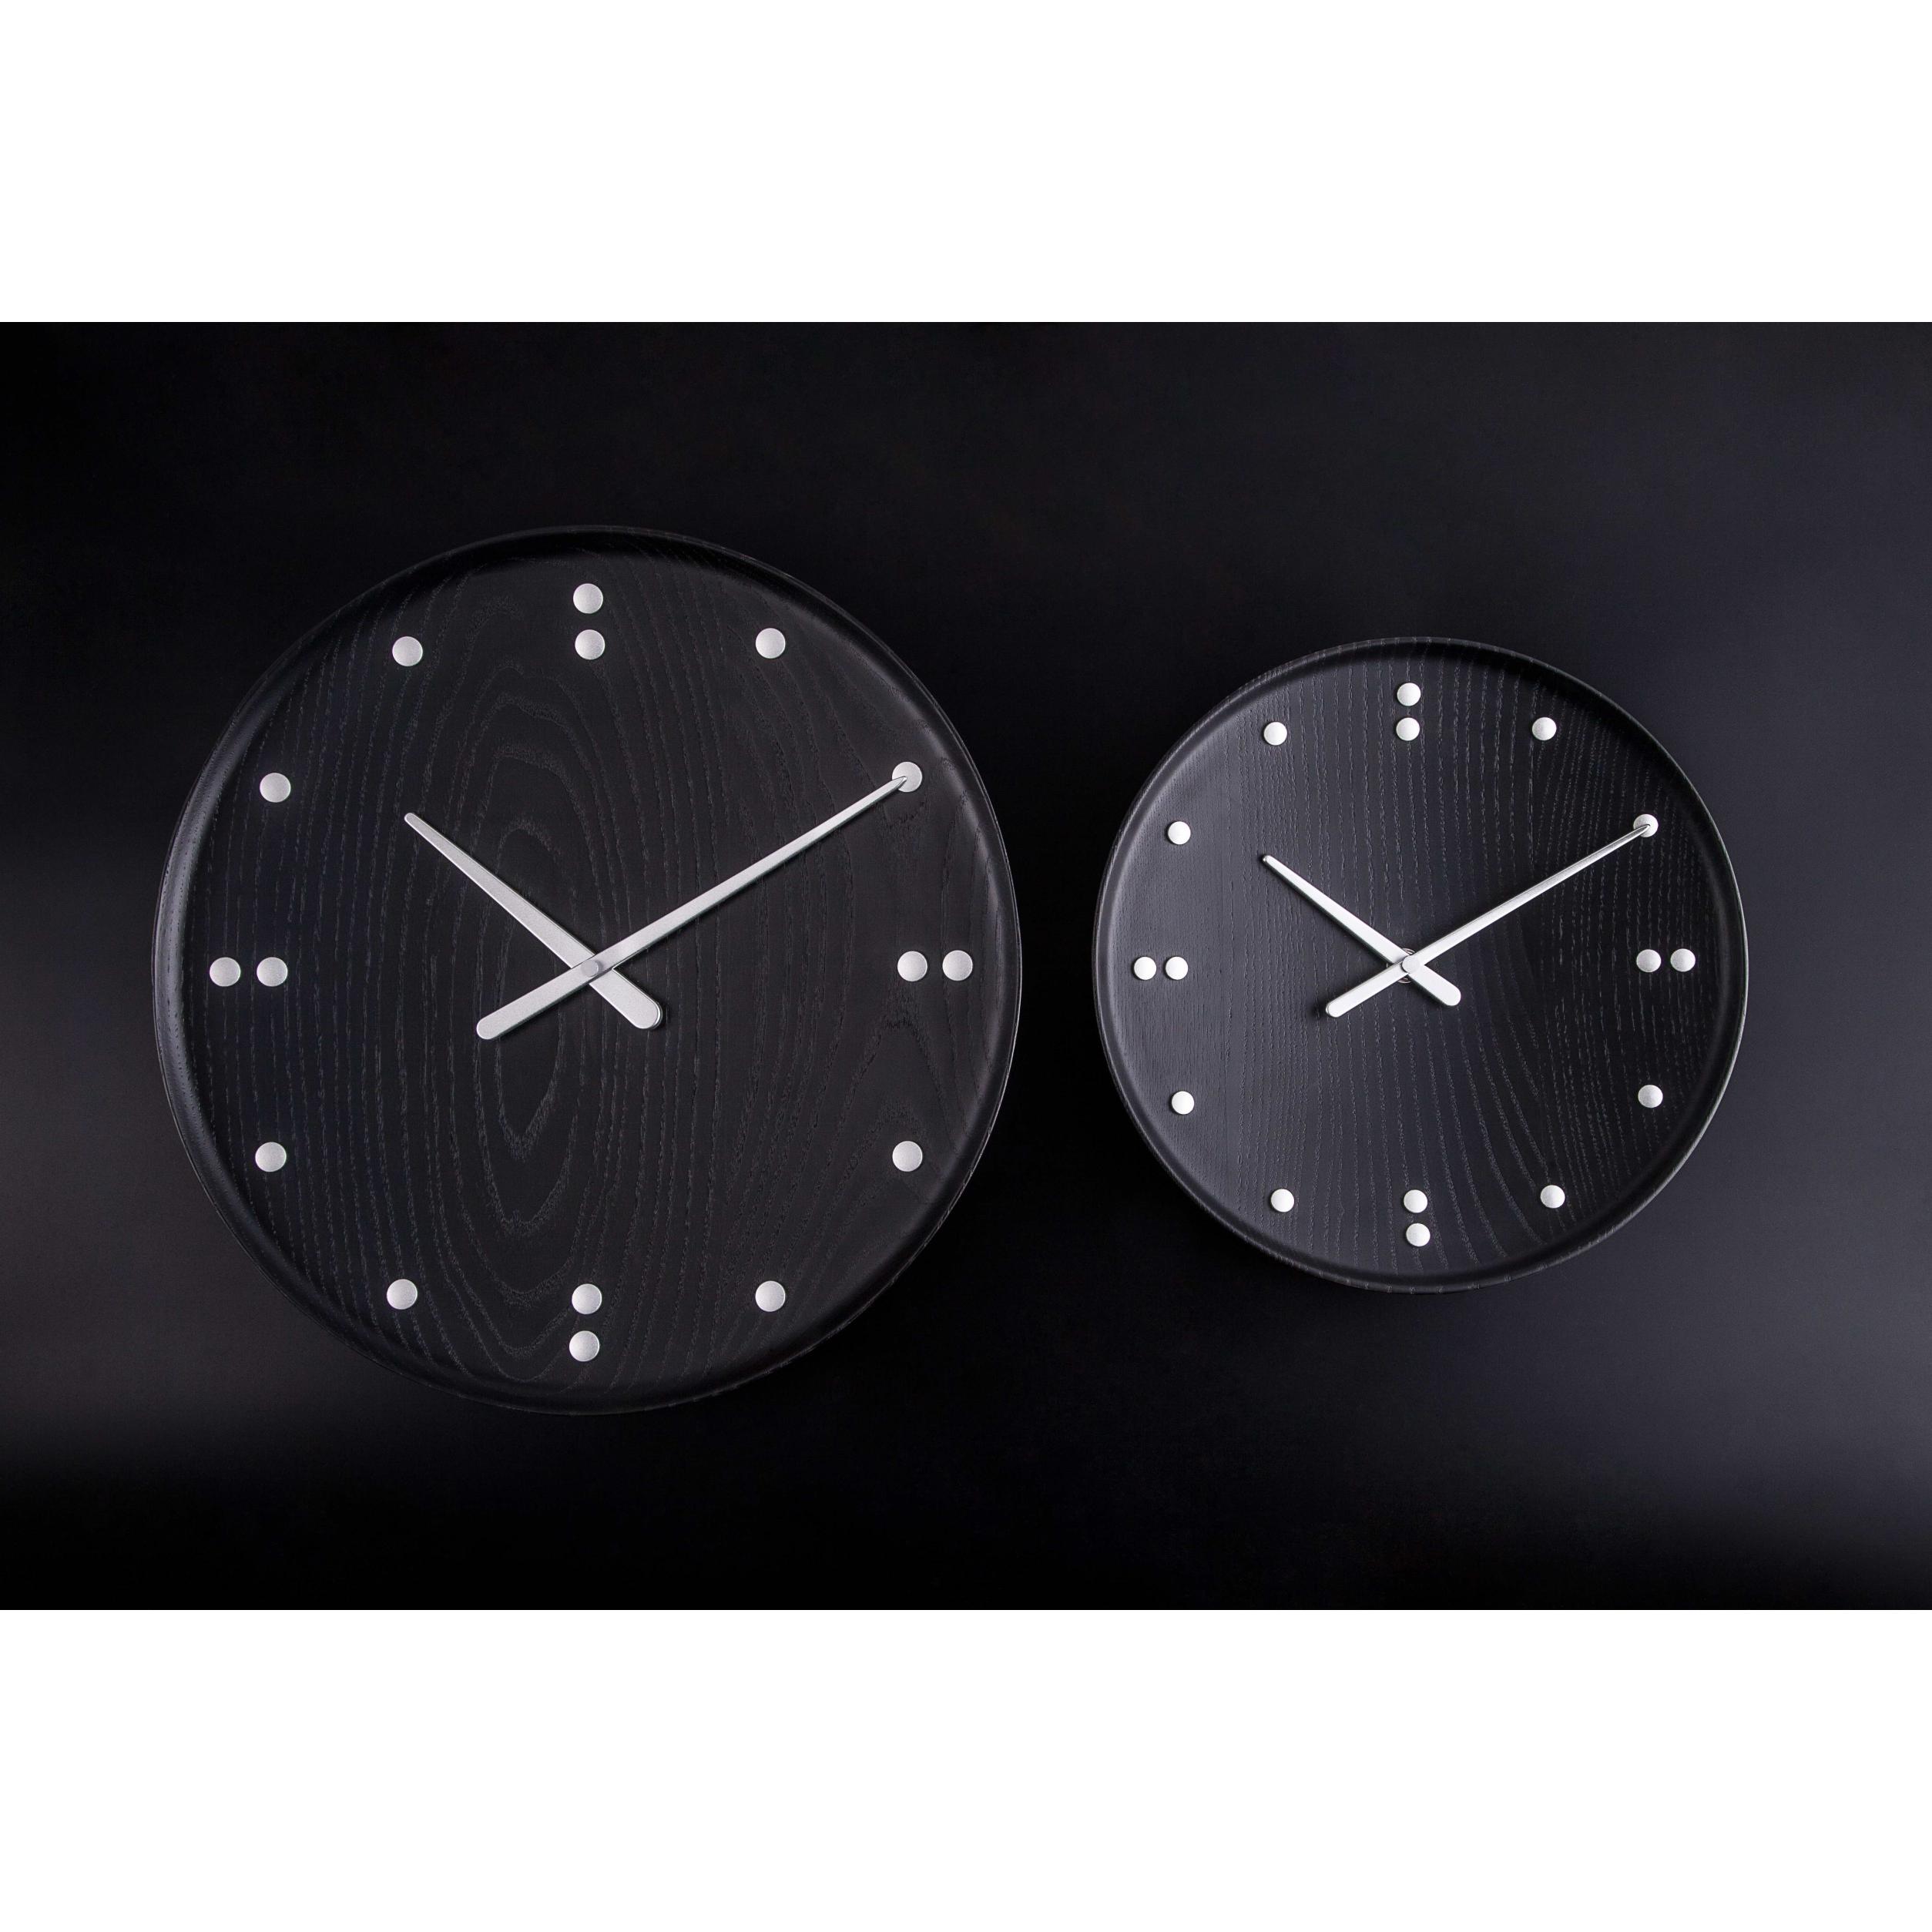 ArkitektMade Finn Juhl Wall Clock Black Ash, Ø35 cm